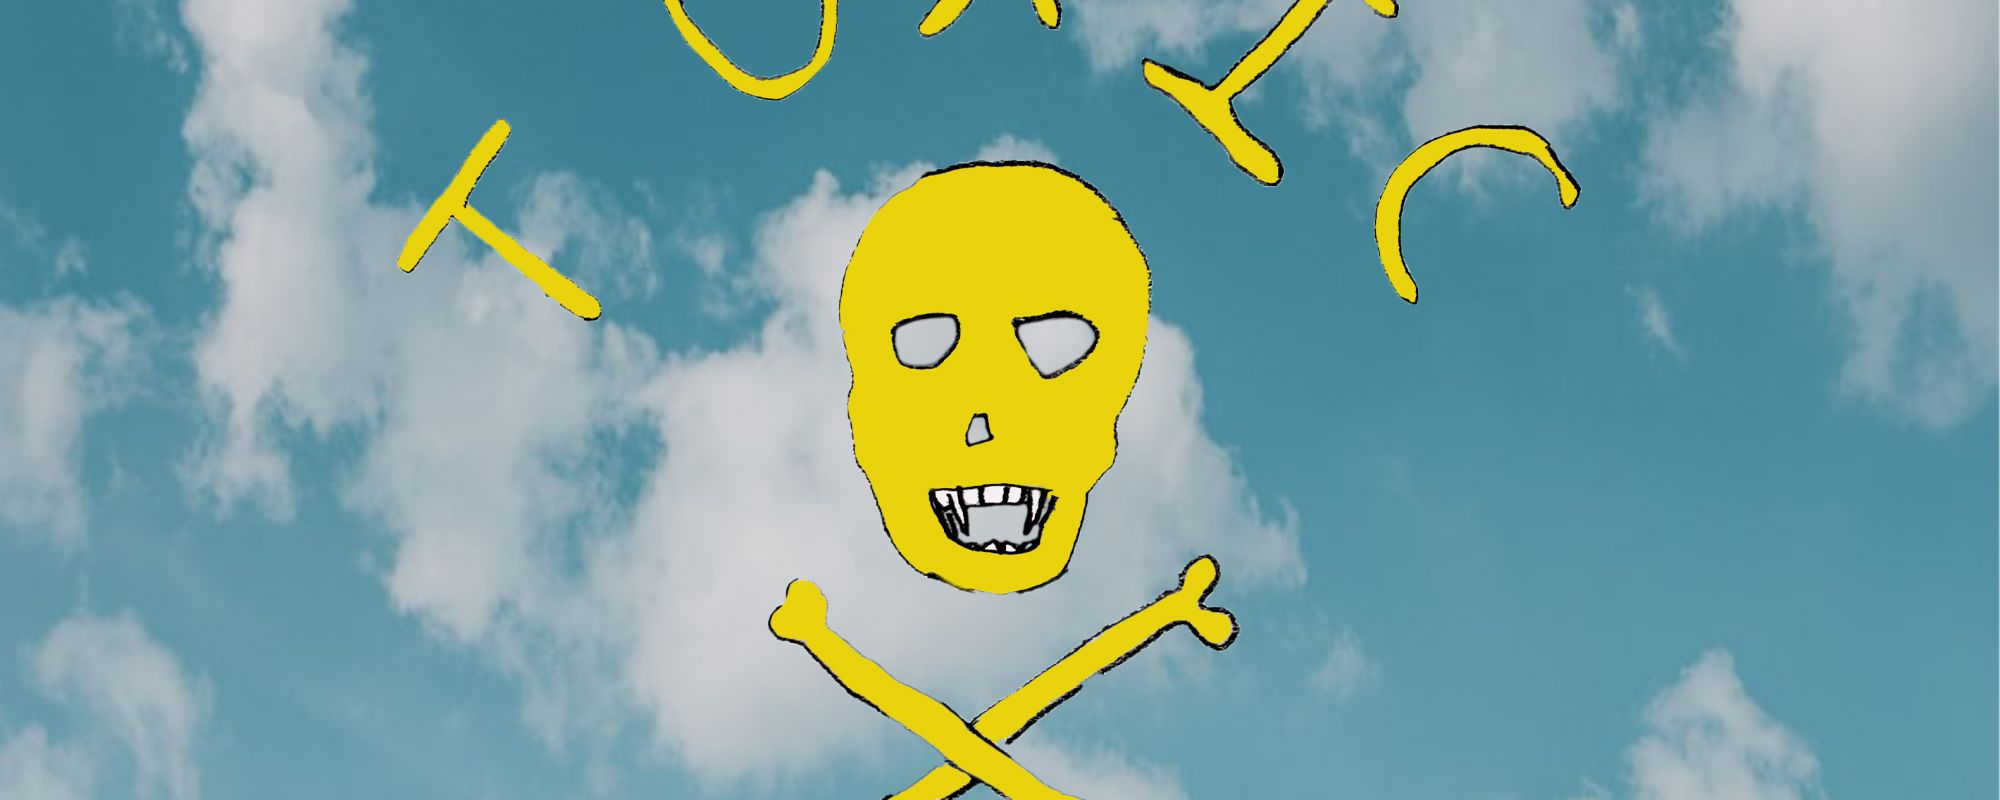 Yellow toxic skull and crossbones symbol